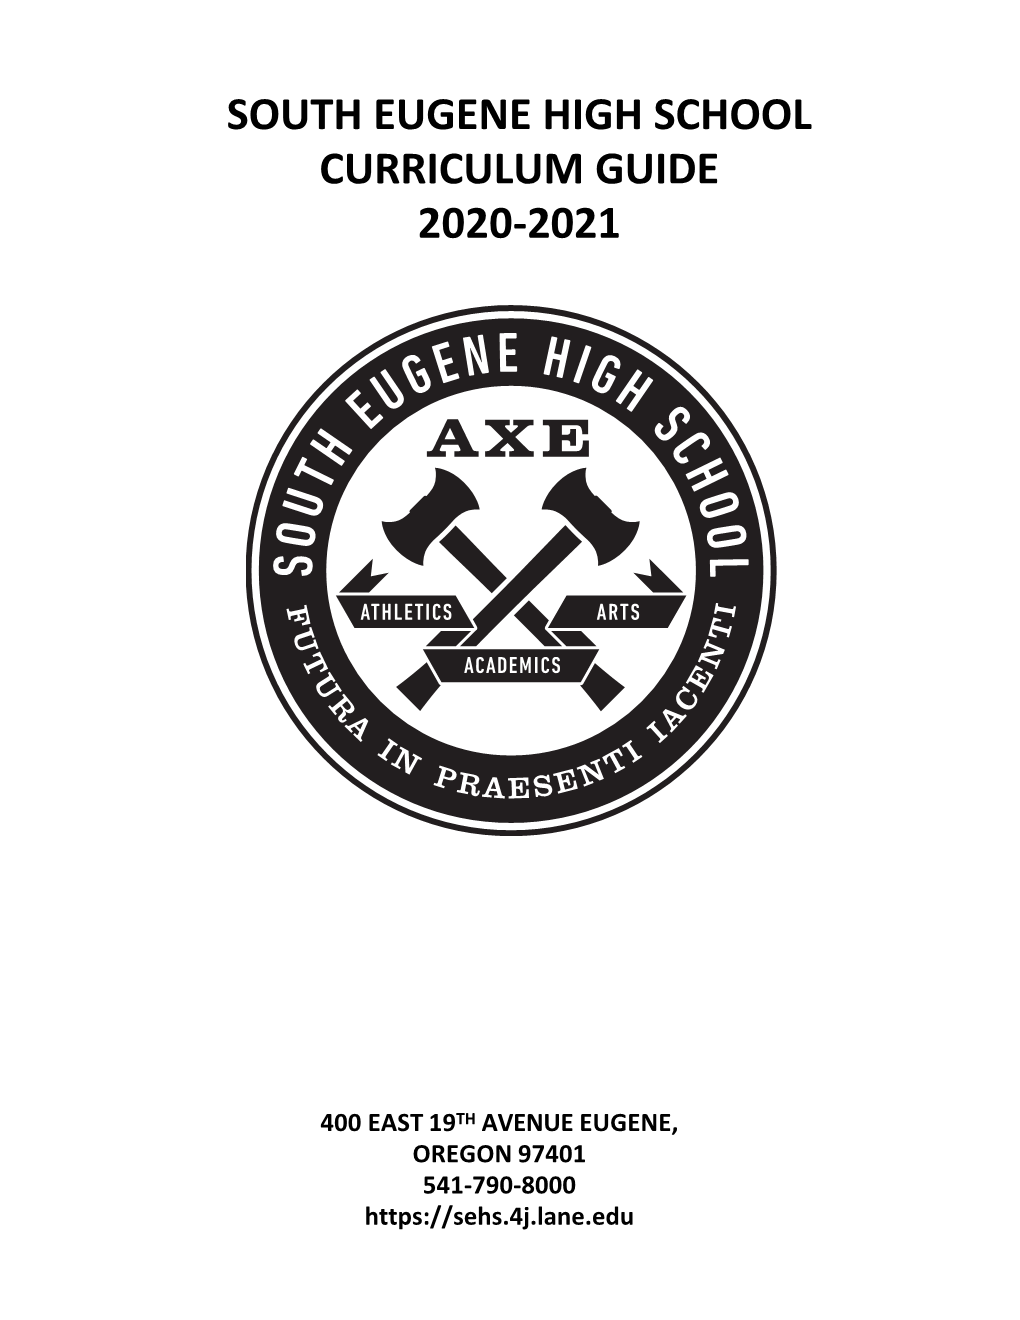 South Eugene High School Curriculum Guide 2020-2021